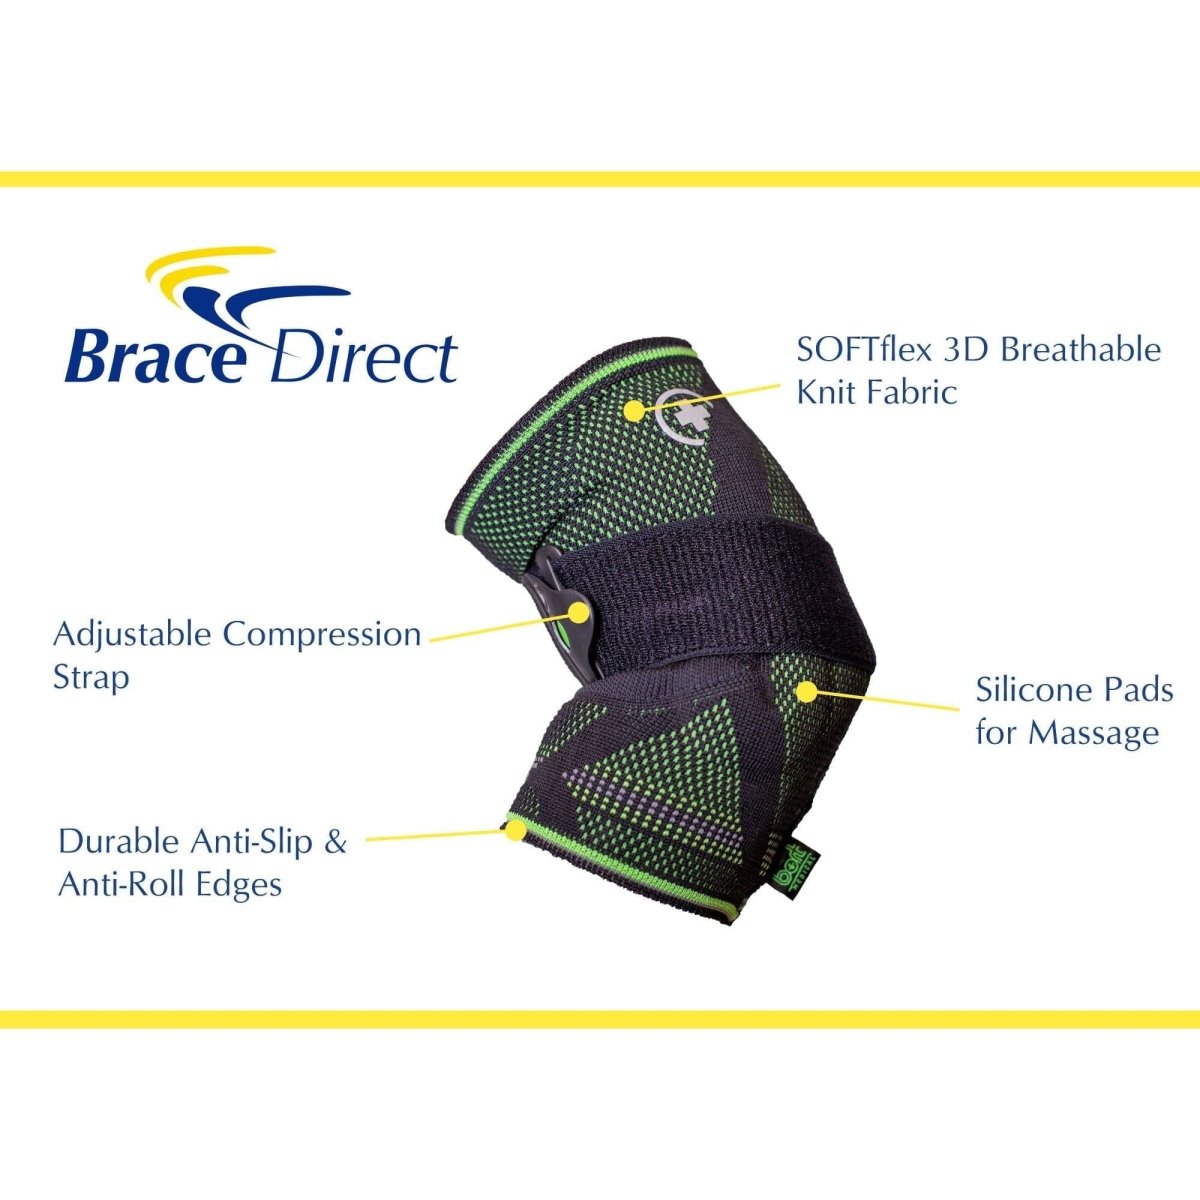 Pediatric Kids Breathable Knit Elbow Compression Brace - Bort by Brace Direct - ARB122600-Kid-2XS - Brace Direct